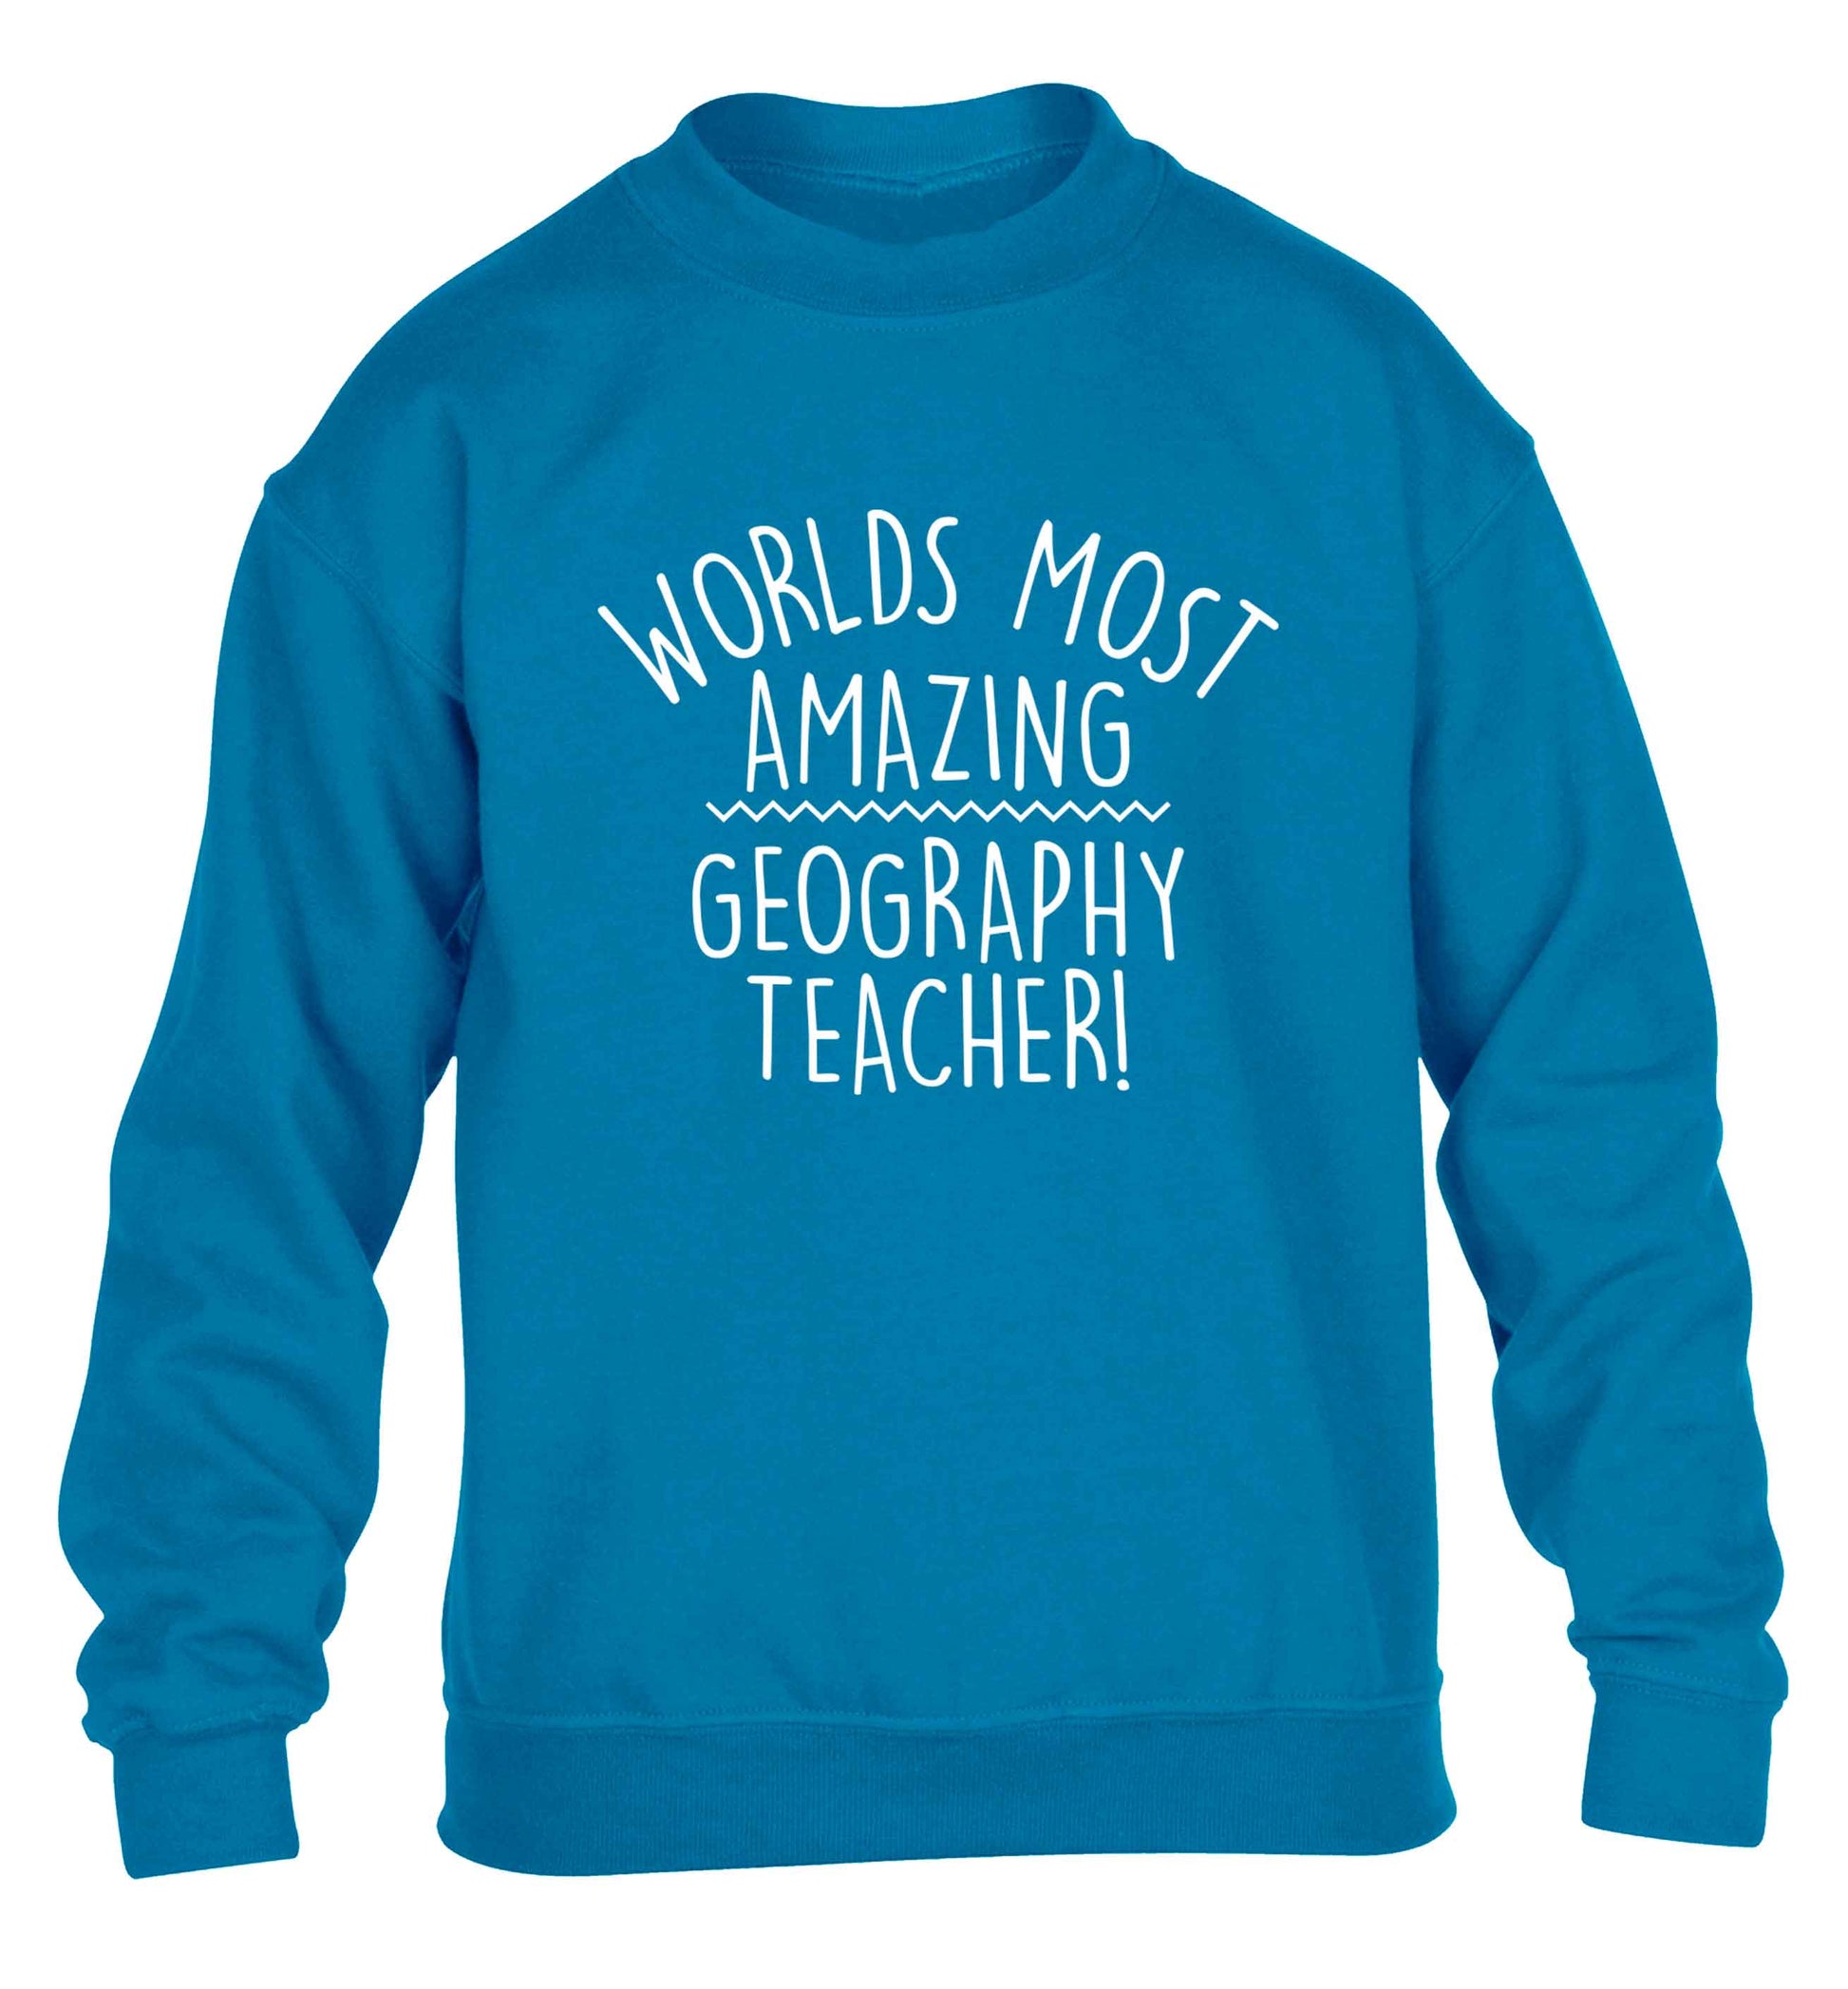 Worlds most amazing geography teacher children's blue sweater 12-13 Years